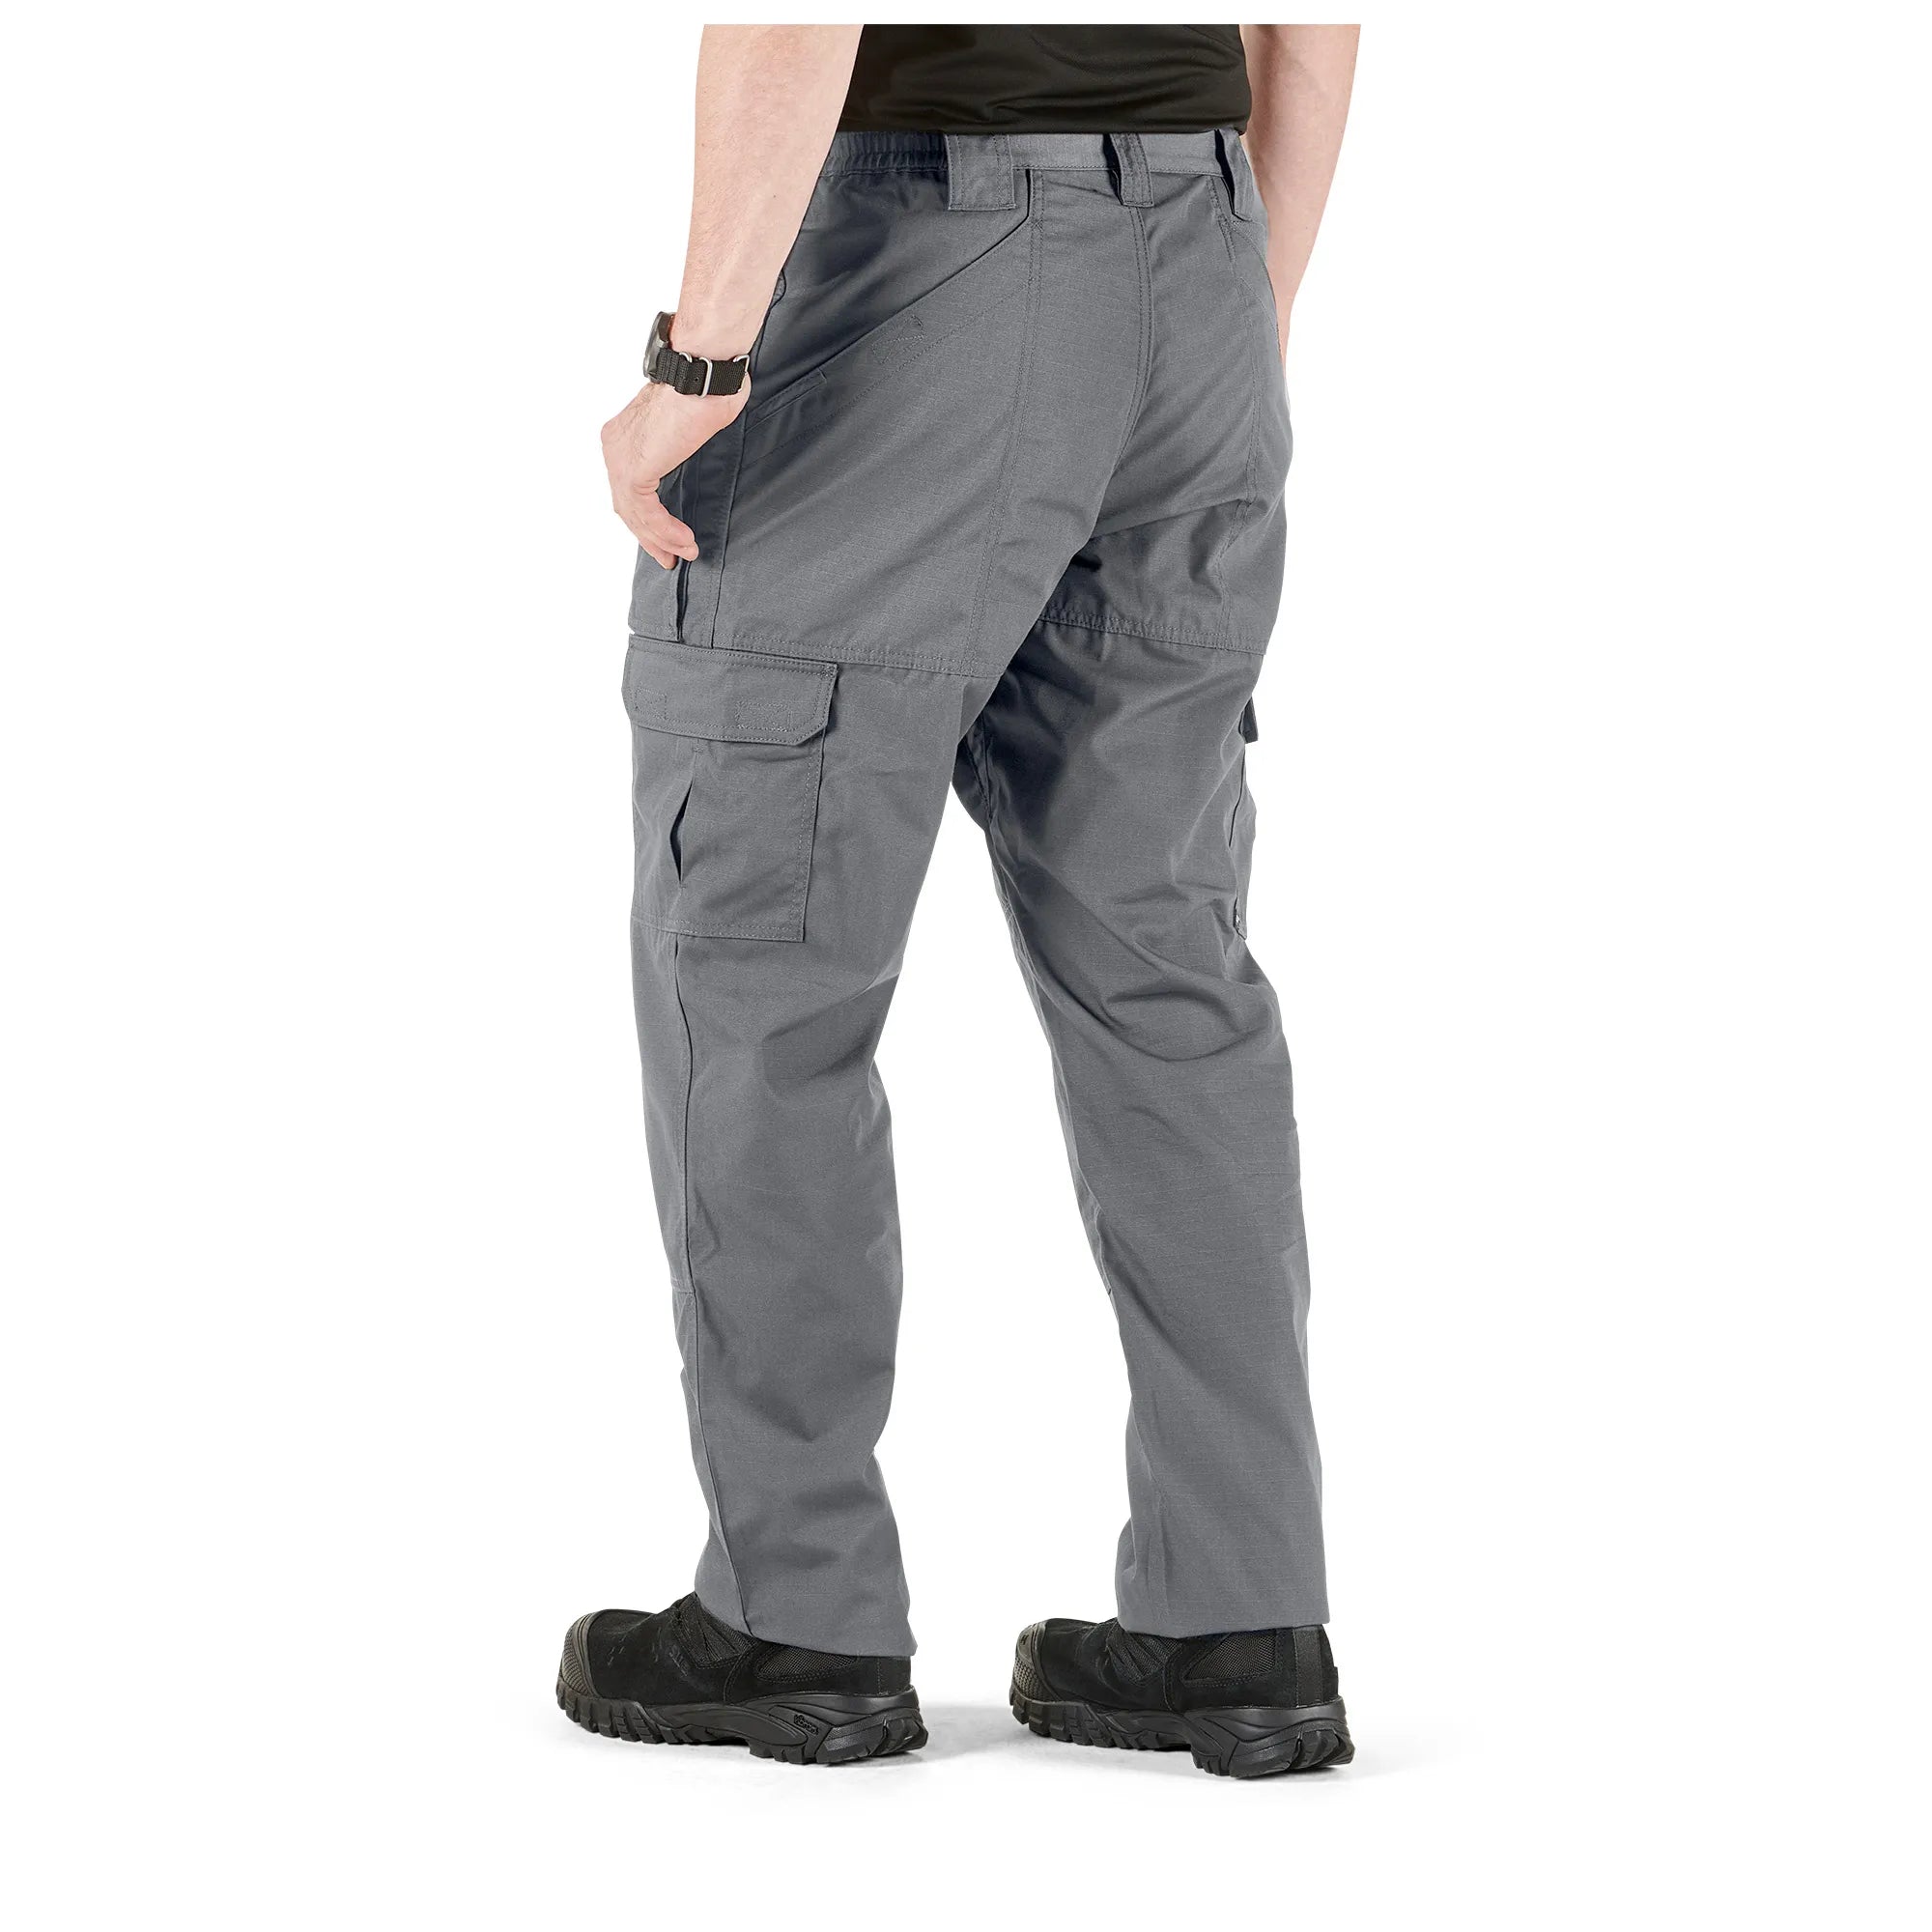 5.11 TACTICAL® TACLITE PRO PANT STORM – Western Tactical Uniform and Gear